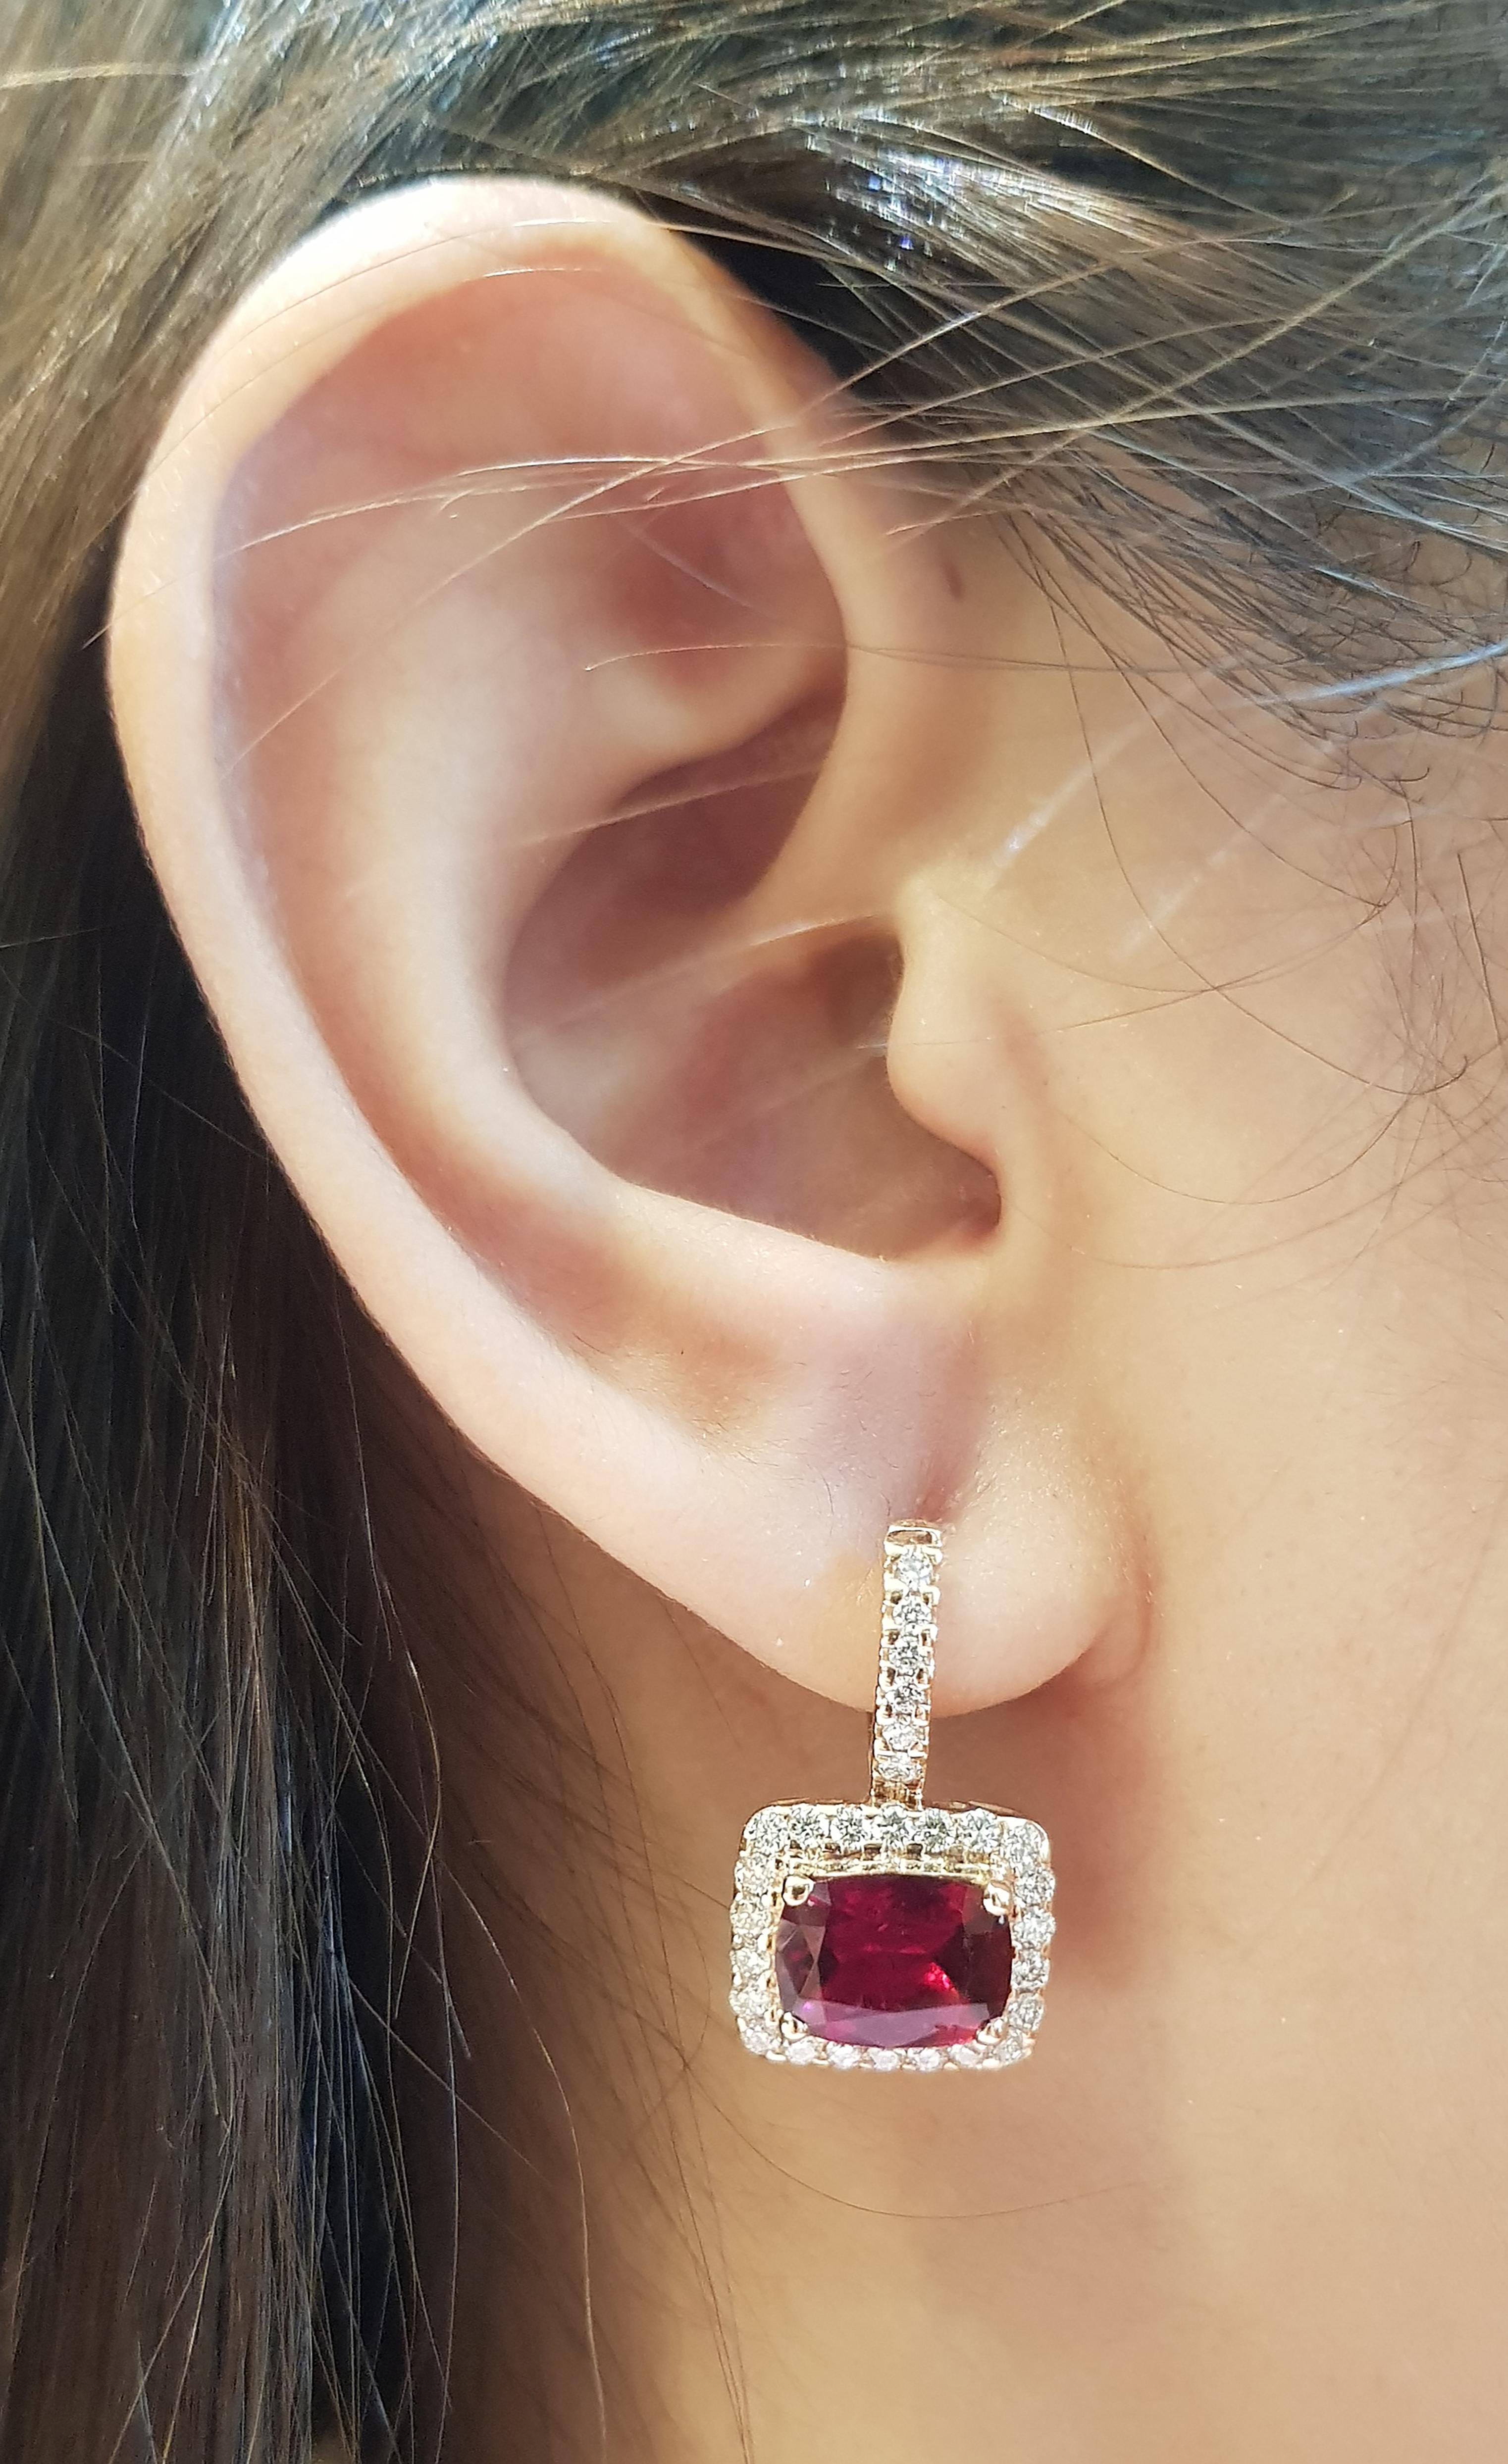 Rubellite 3.90 carats with Diamond 0.95 carat Earrings set  in 18 Karat Rose Gold Settings

Width:  1.2 cm 
Length: 2.2 cm
Total Weight: 7.62 grams

